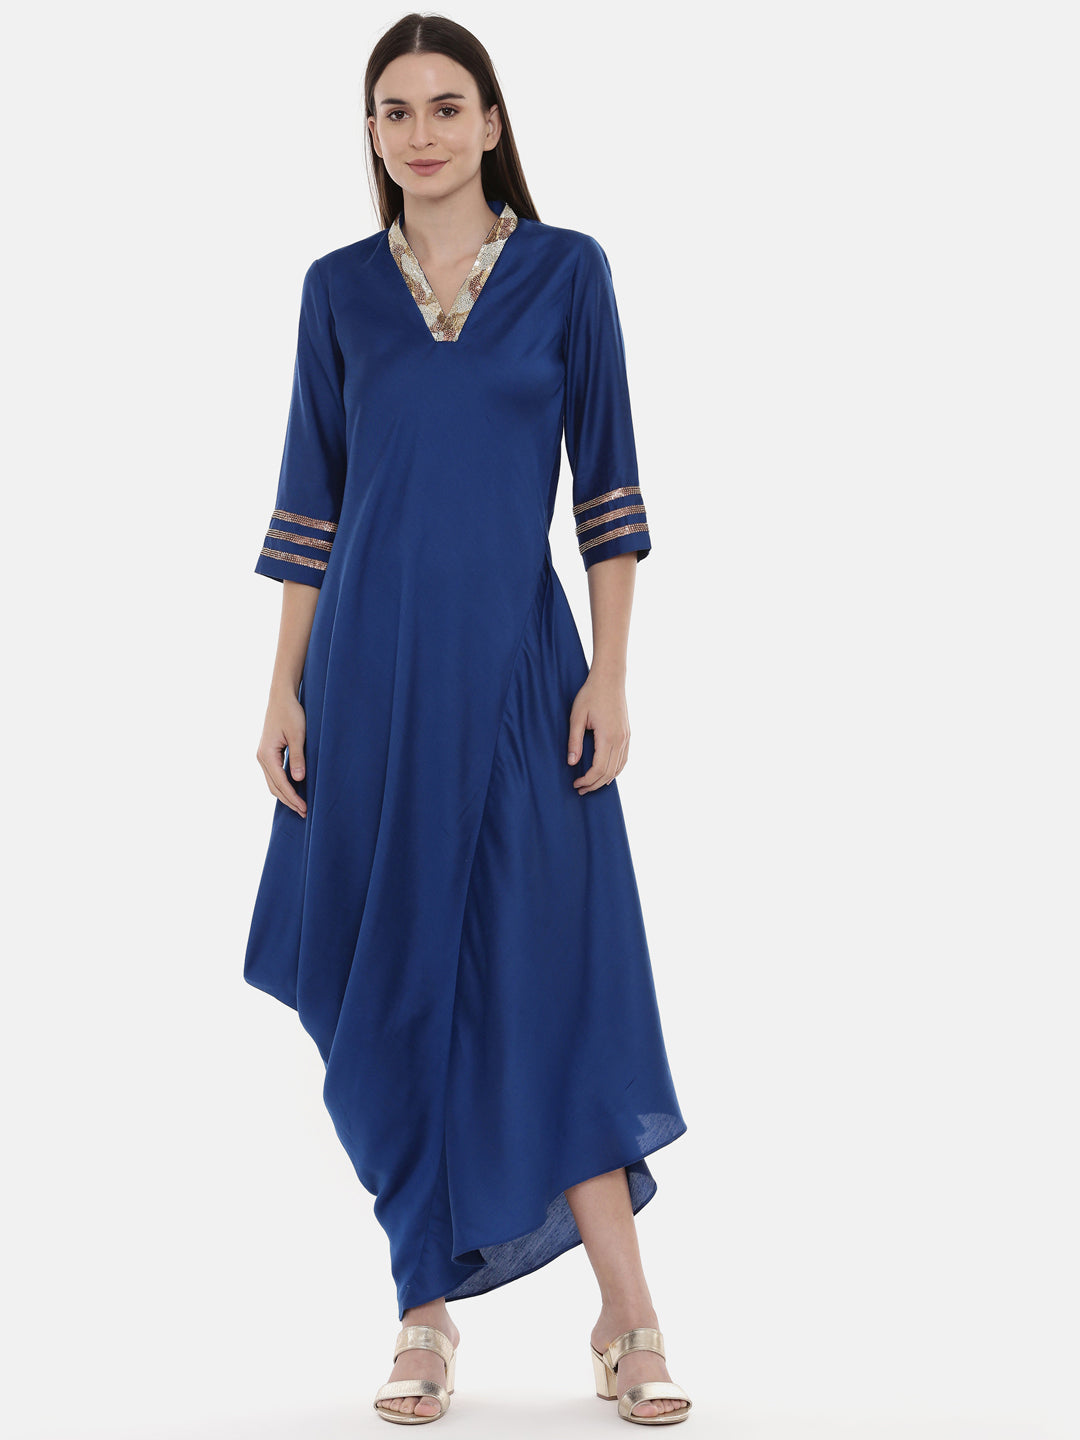 Blue Drape Linen Satin Dress - AS0551